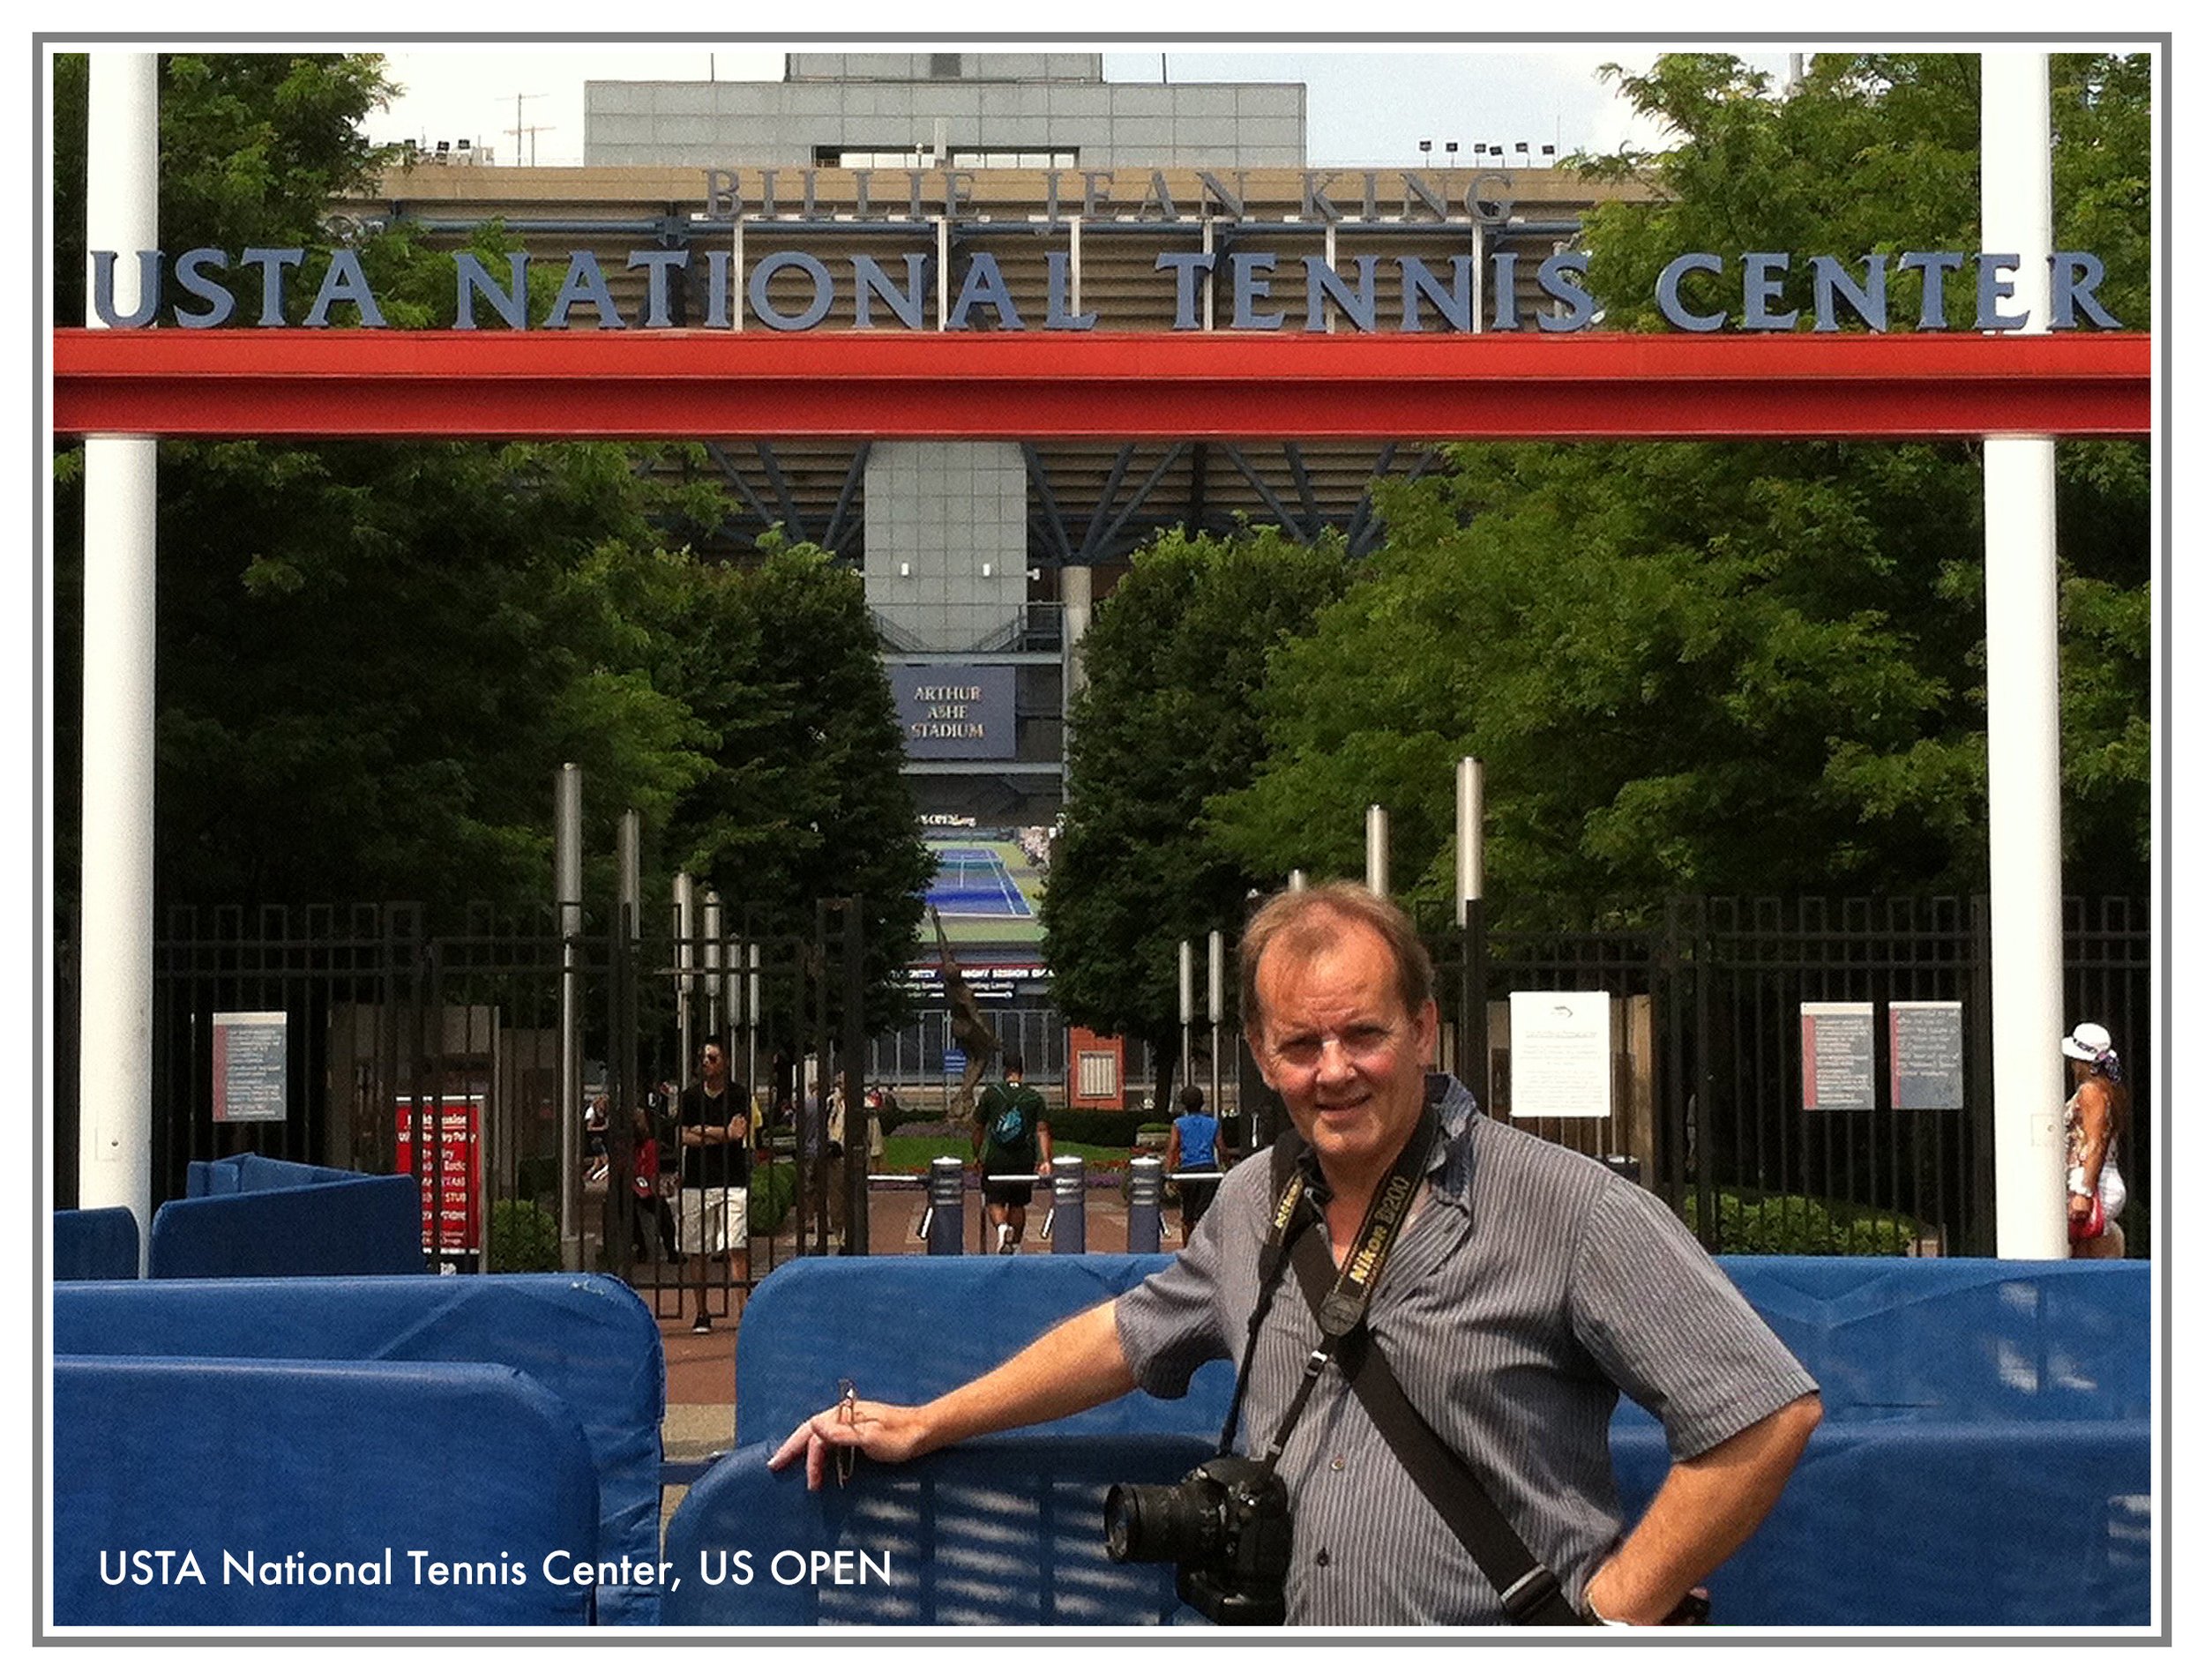  USTA Billie Jean King National Tennis Center (since 1978)